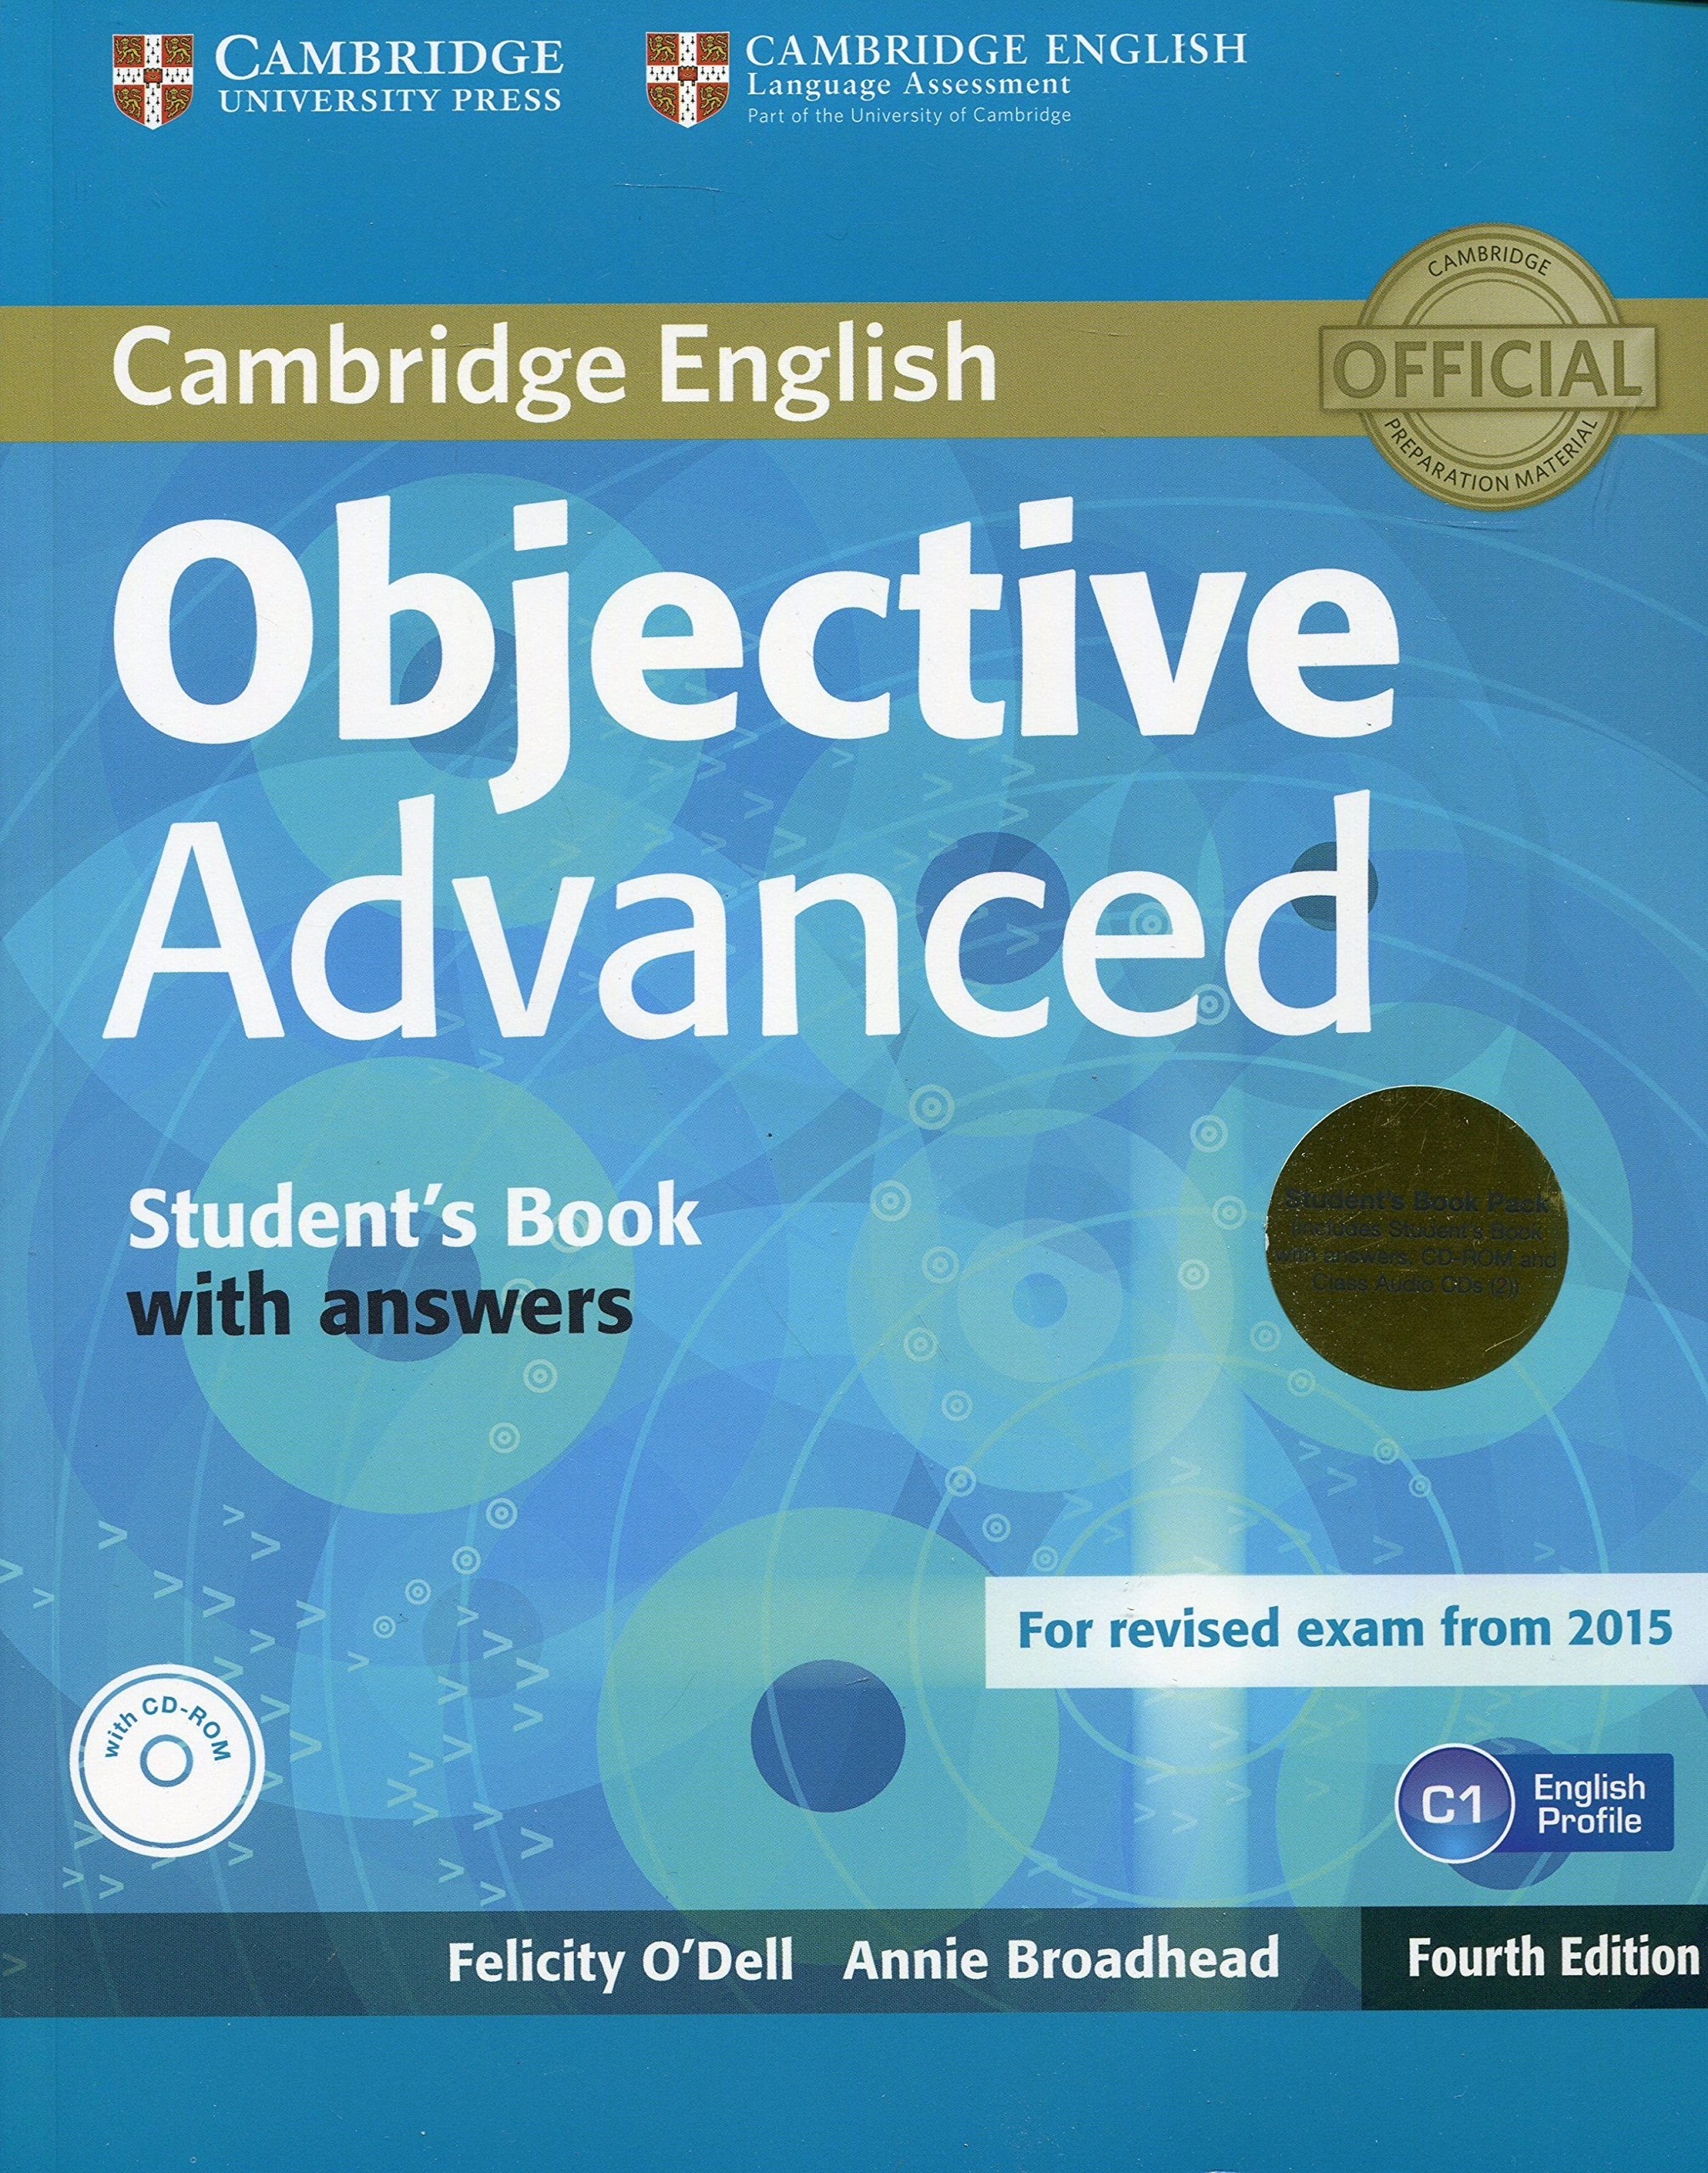 15 libros recomendados para practicar inglés según tu nivel – Blue